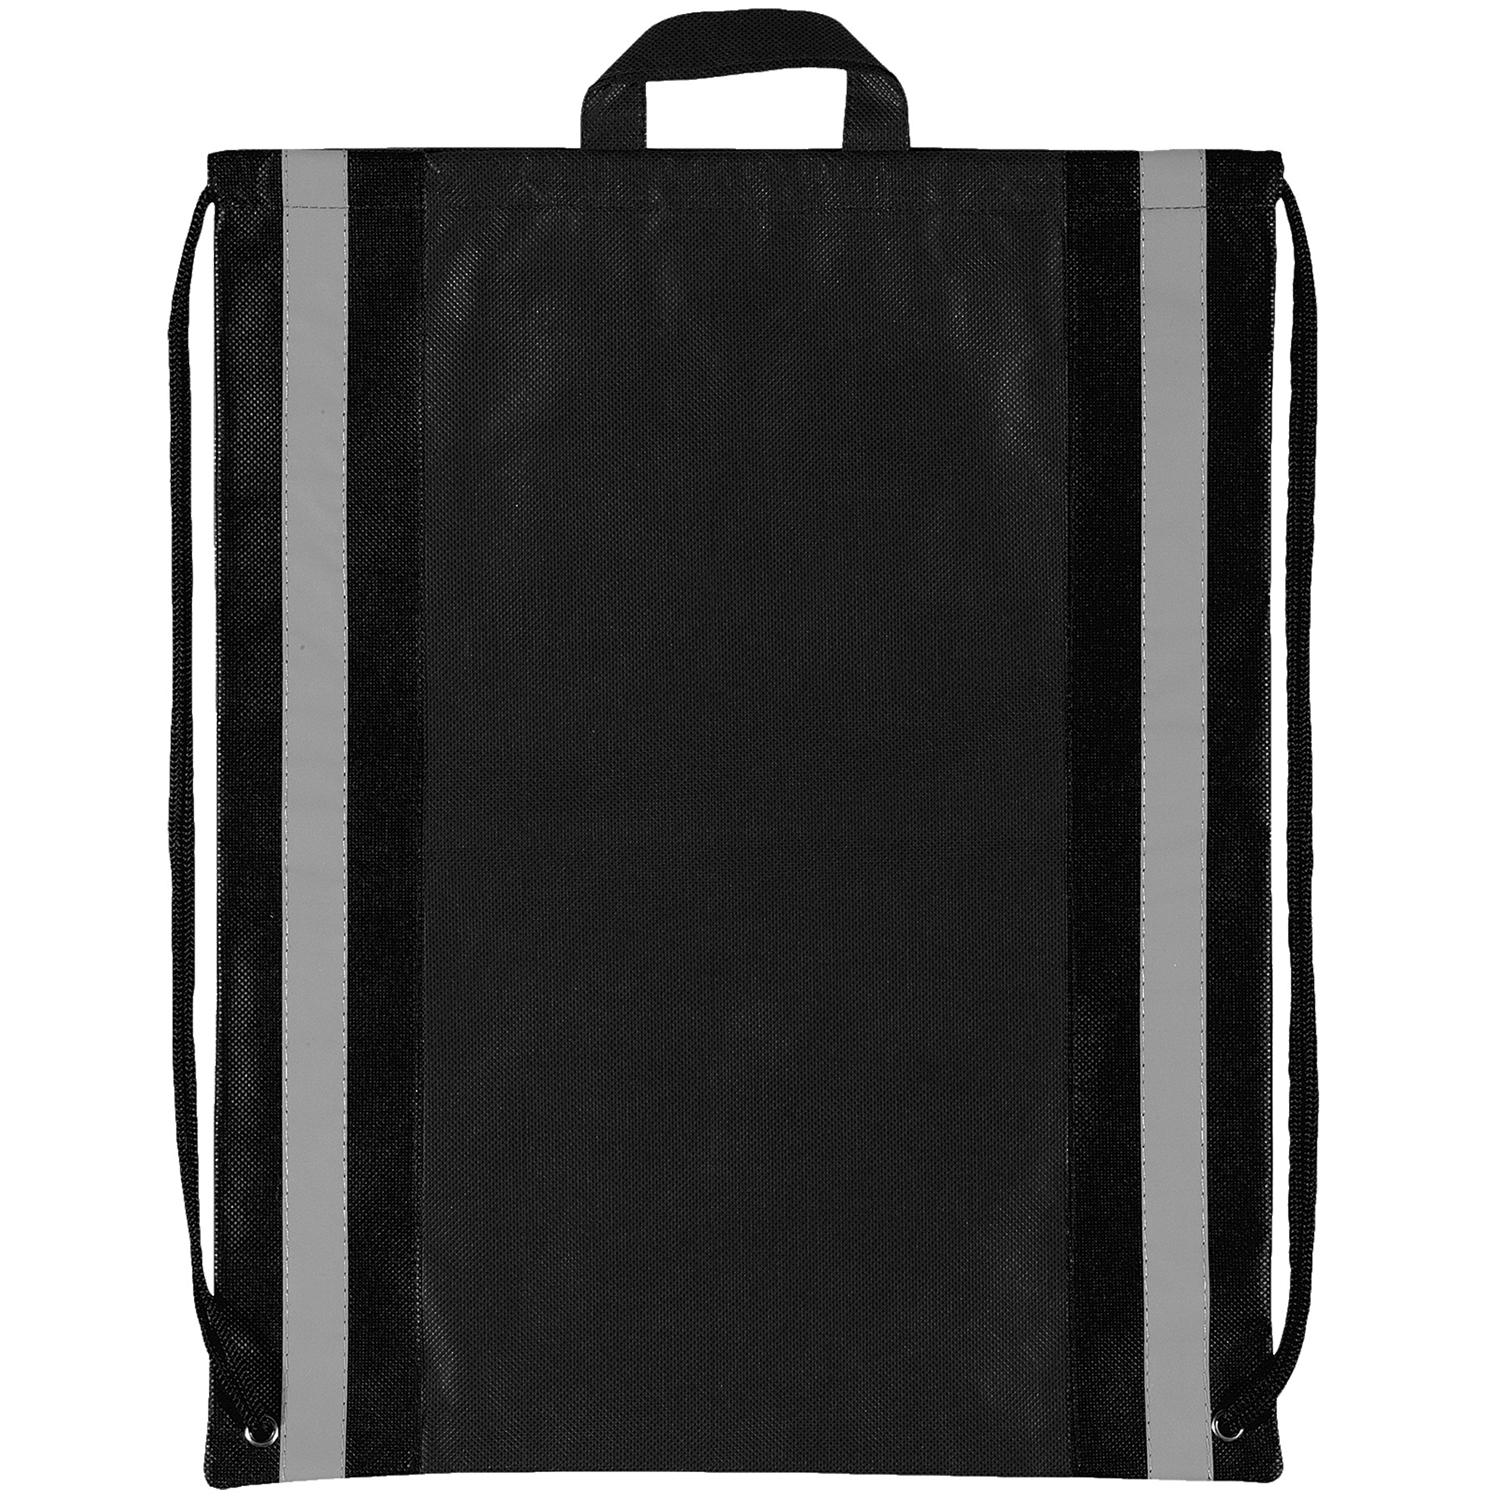 Bag Makers SPRT1620 - Custom Printed Eco-Friendly Non-Woven Sports Drawstring Bag